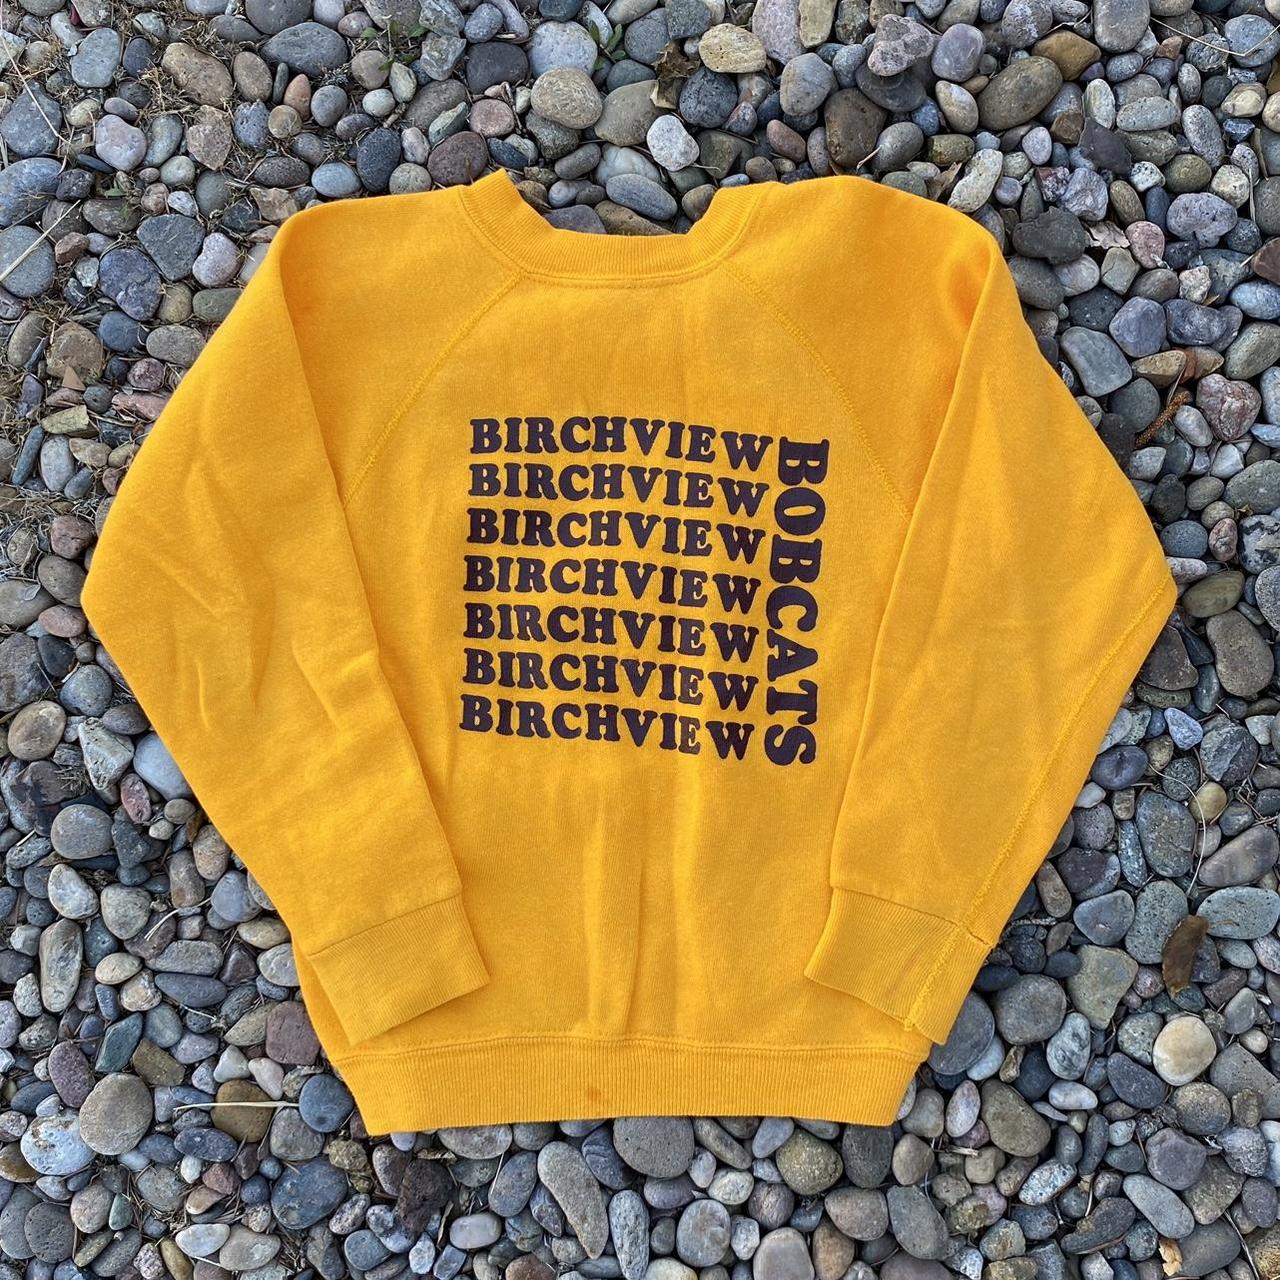 Apple Vintage - Apparel - Birchview Bobcats Sweater